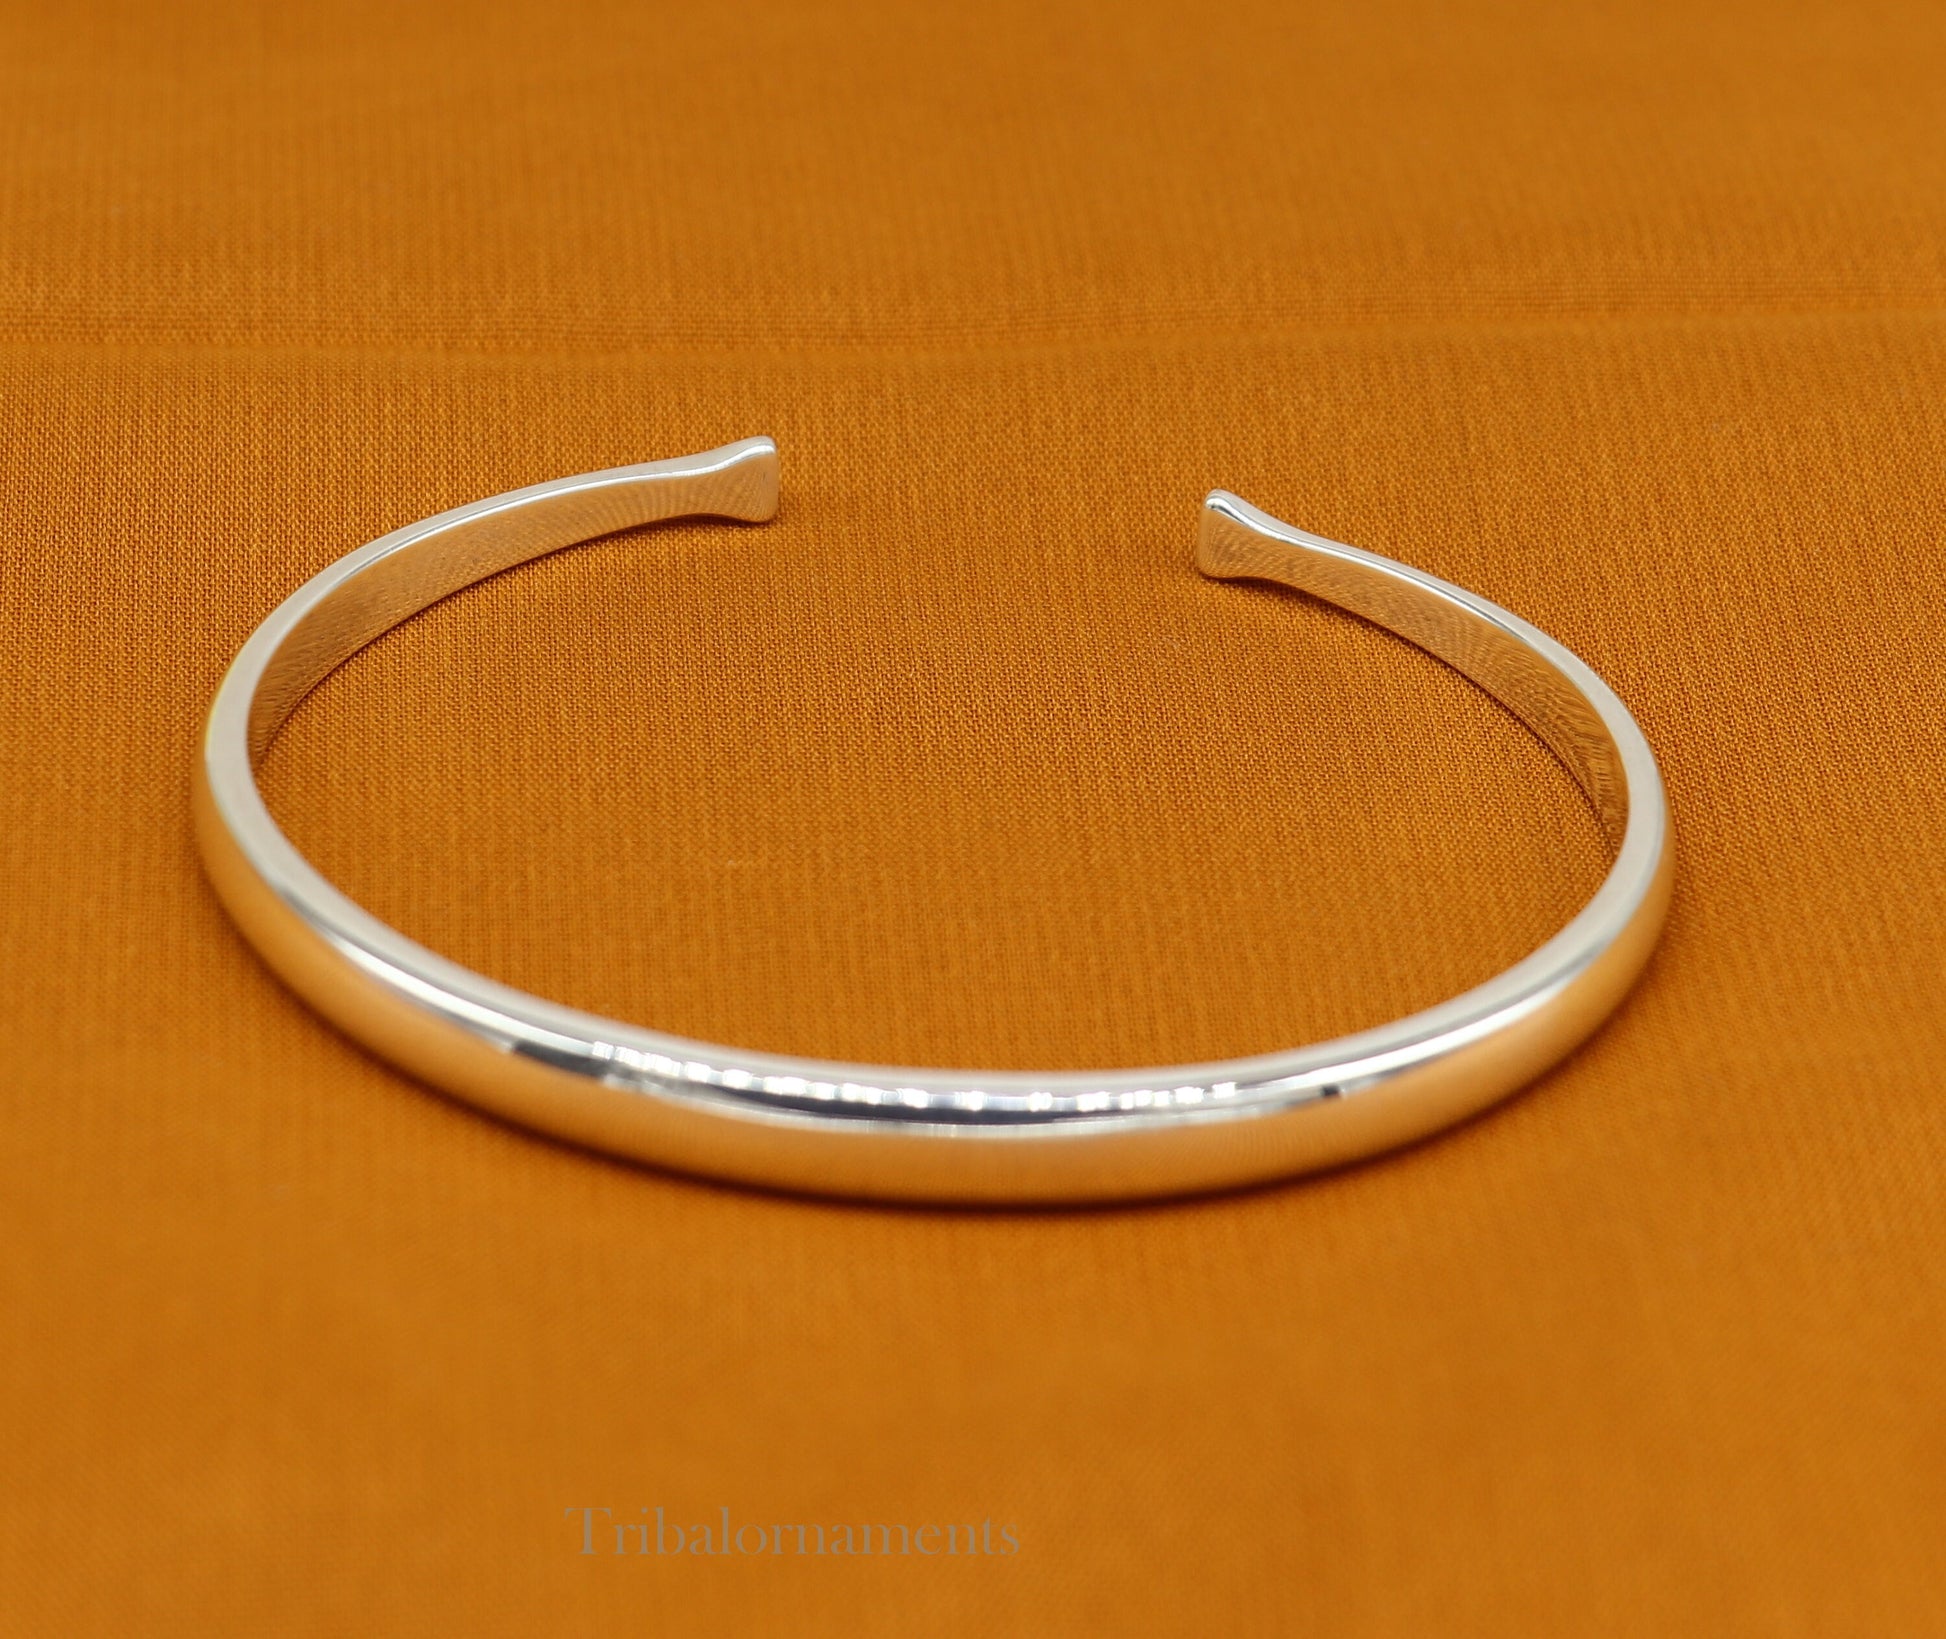 Plain shiny solid 925 sterling silver handmade adjustable cuff bangle bracelet unsex gifting jewelry, solid shiny bracelet nsk378 - TRIBAL ORNAMENTS